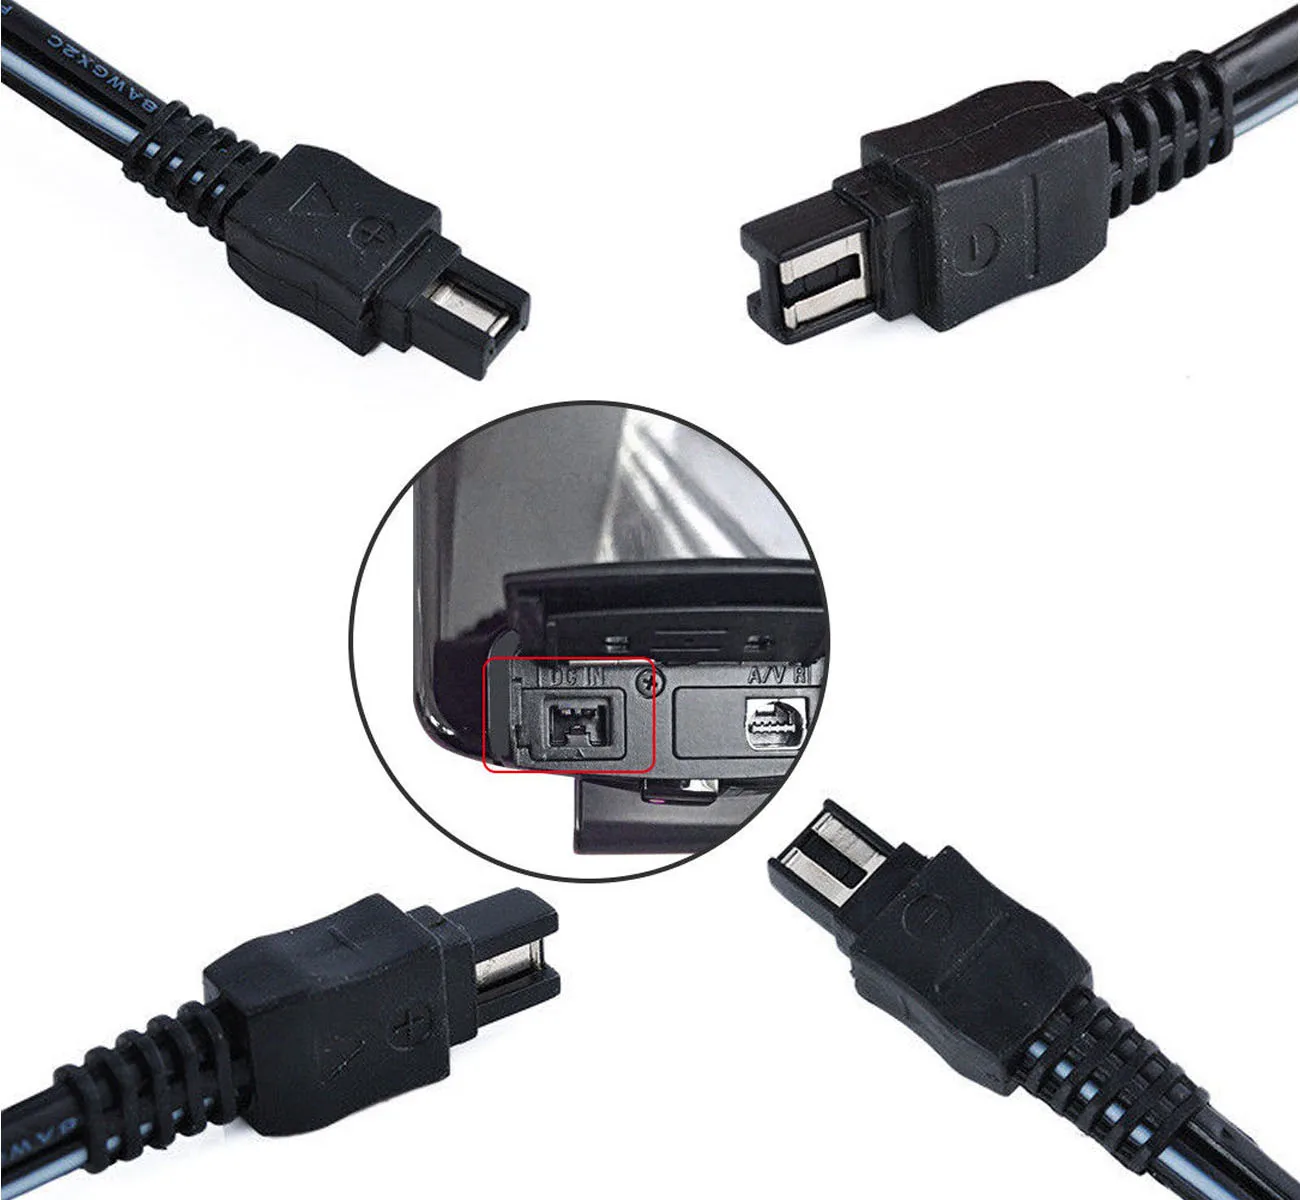 AC адаптер питания зарядное устройство для sony HDR-CX130E, HDR-CX150E, CX155E, HDR-CX160E, HDR-CX170E, HDR-CX180E, HDR-CX190E Handycam видеокамеры